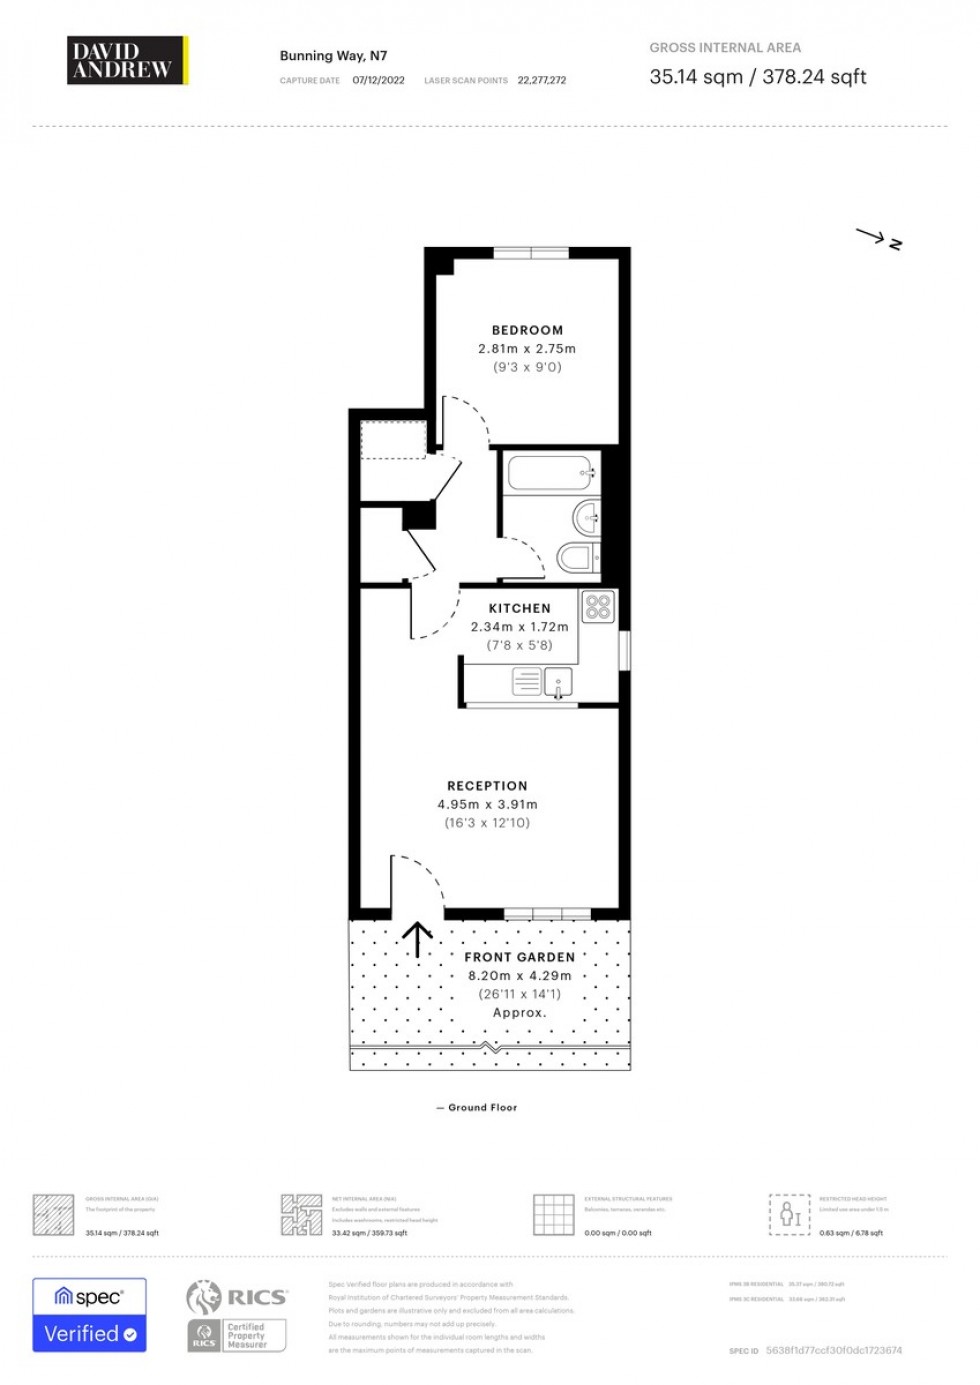 Floorplan for Bunning Way, N7 9UP